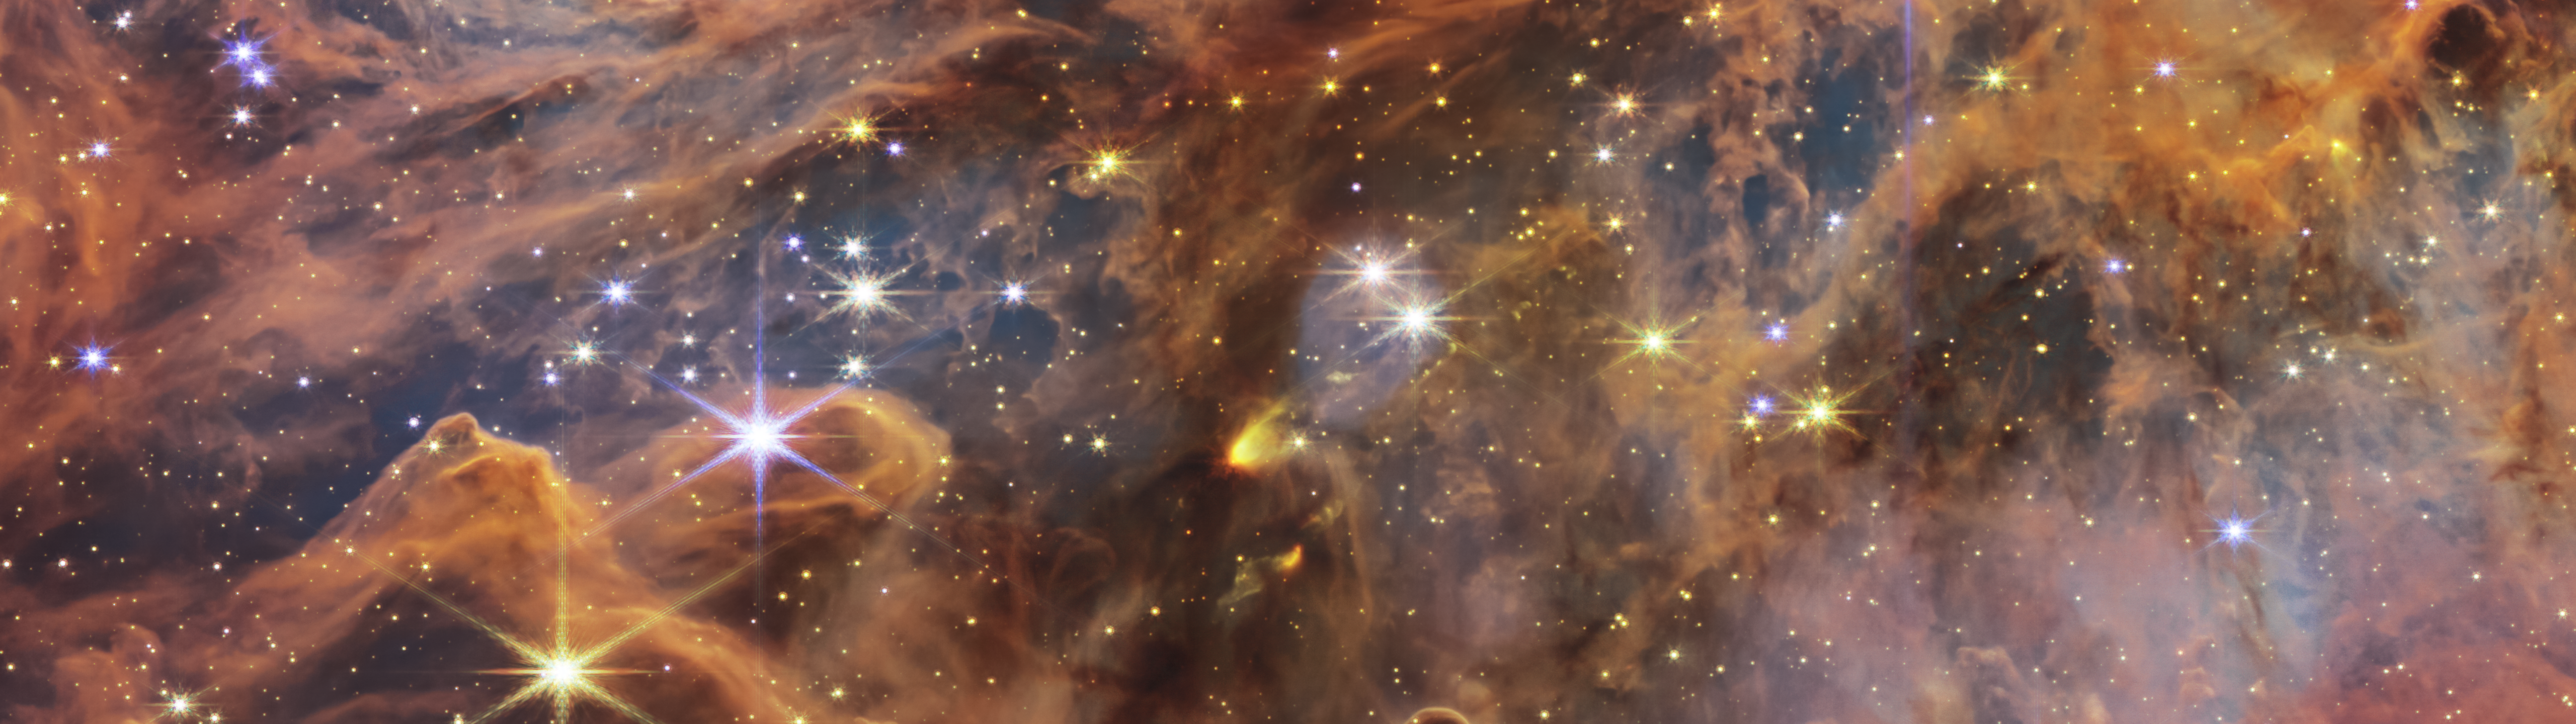 Space James Webb Space Telescope Nebula Carina Nebula NASA Infrared Stars NGC3132 5120x1440